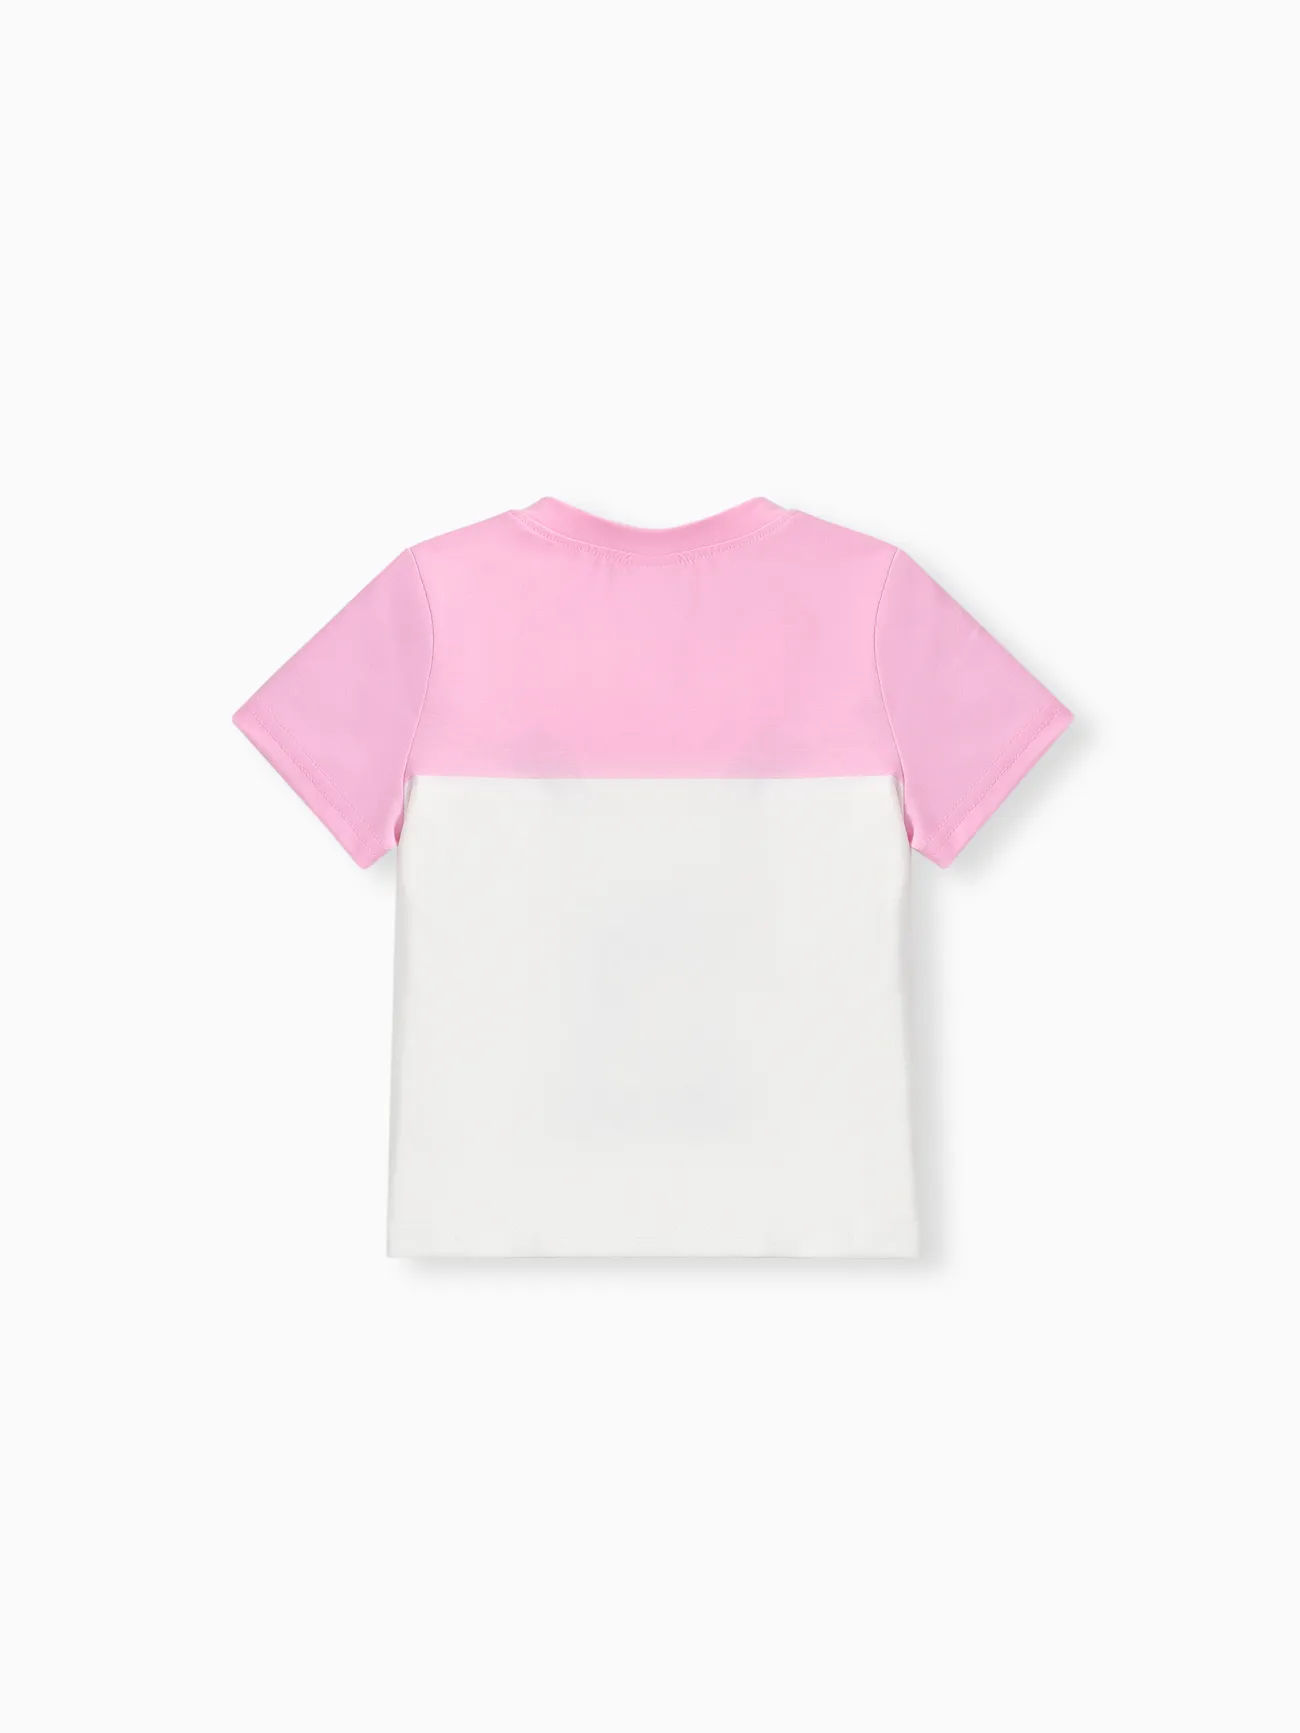 Disney Stitch Toddler Boys/Girls 1pc Naia™ Theme Slogan Character Print T-shirt Pink big image 1